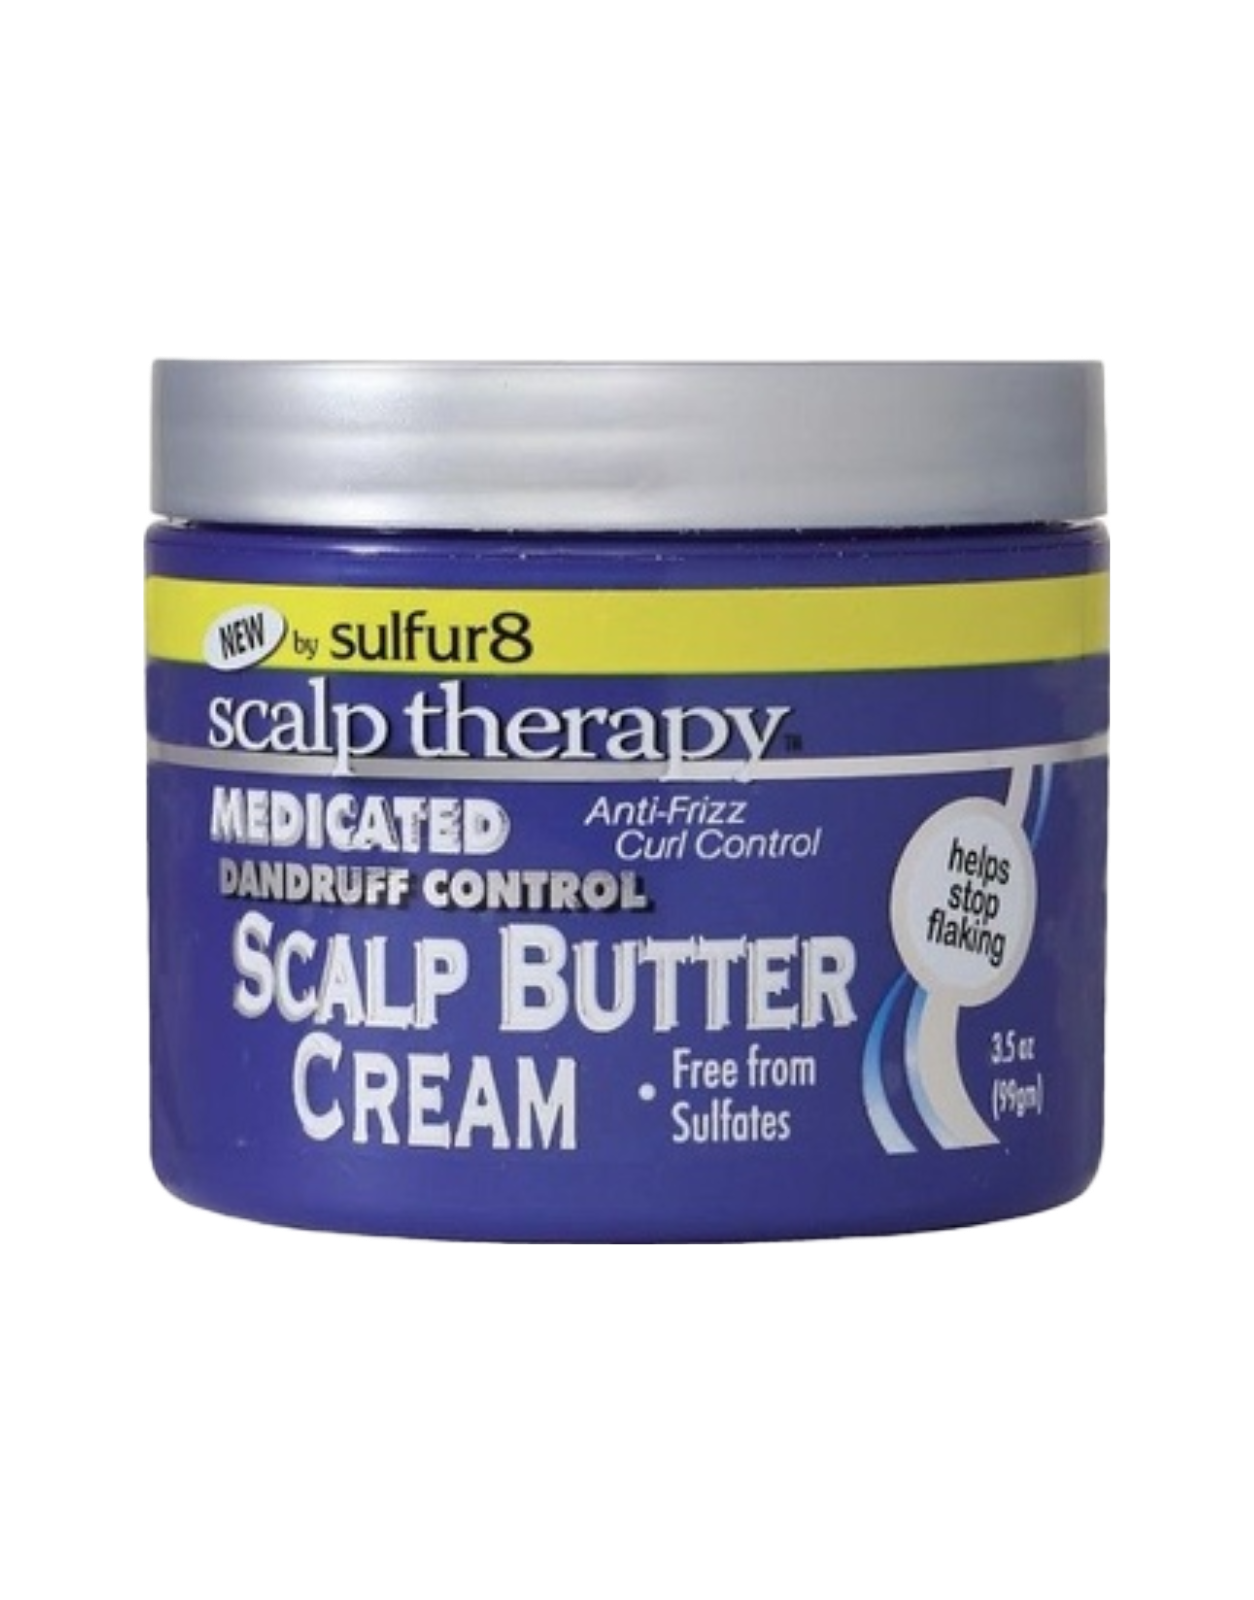 Sulfur8 - Scalp Therapy Medicated Dandruff Control Cream Scalp Butter Cream